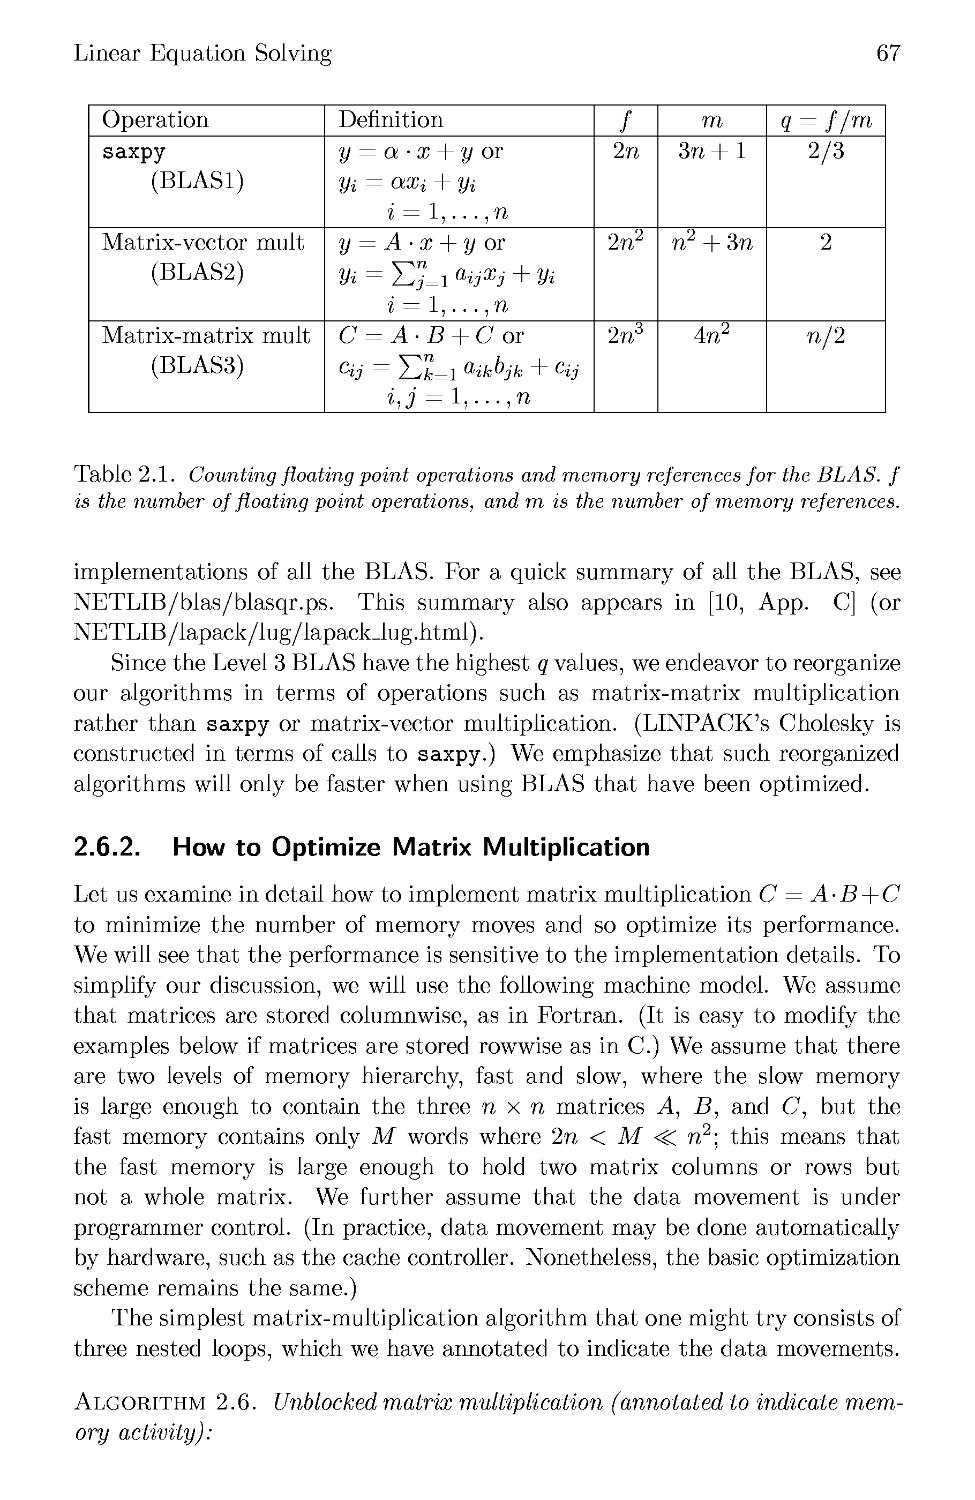 2.6.2 How to Optimize Matrix Multiplication